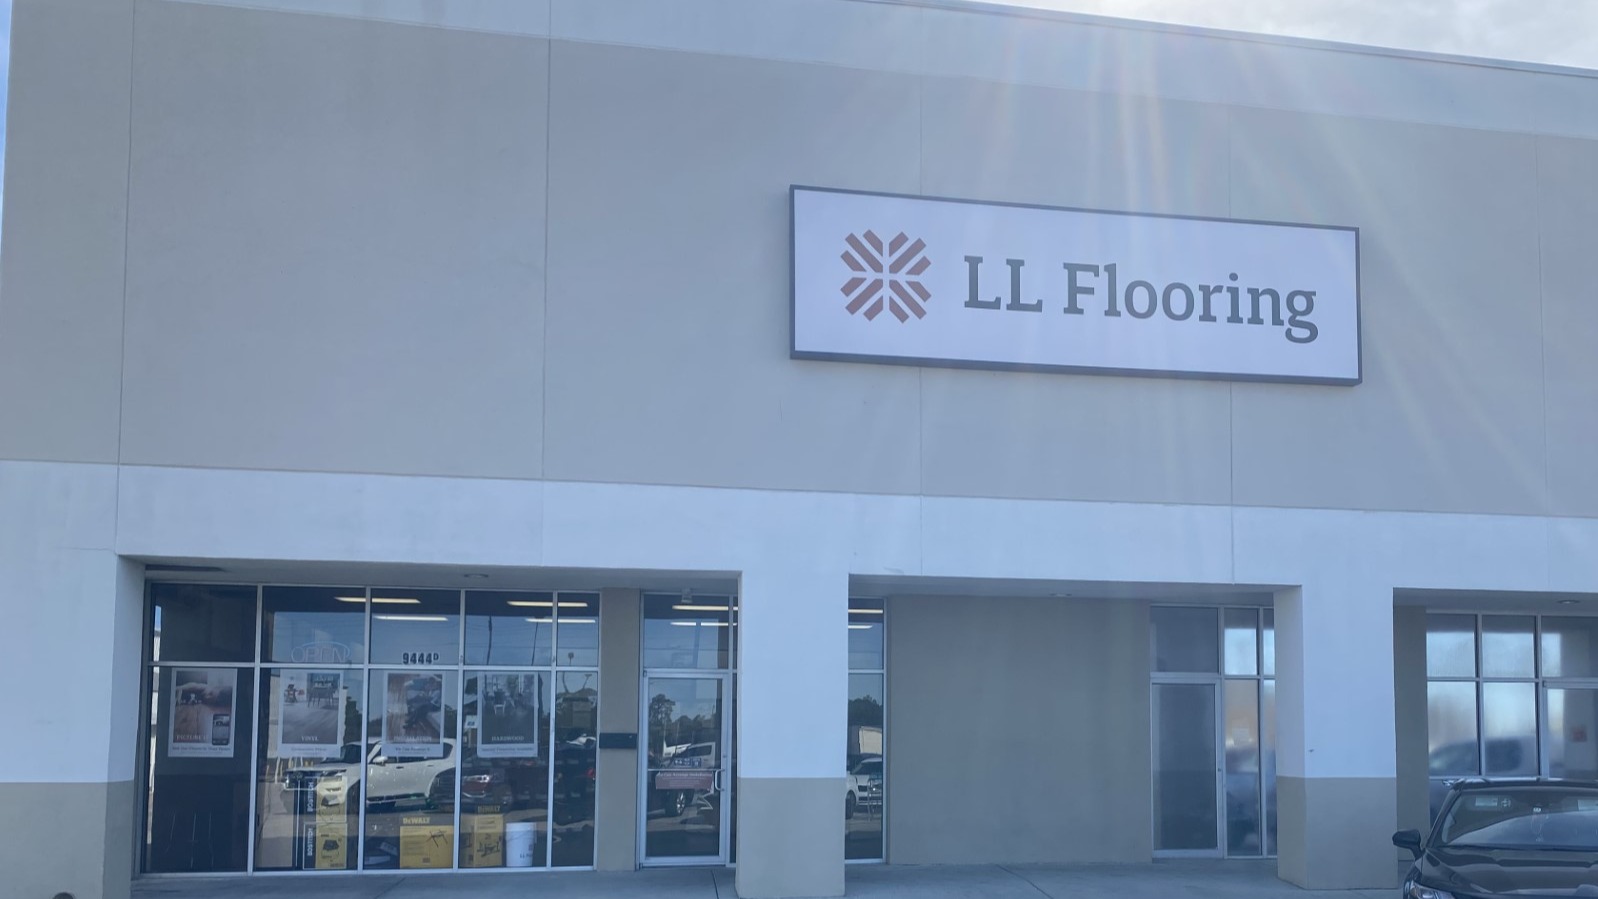 LL Flooring #1378 Gulfport | 9444 Highway 49 | Storefront